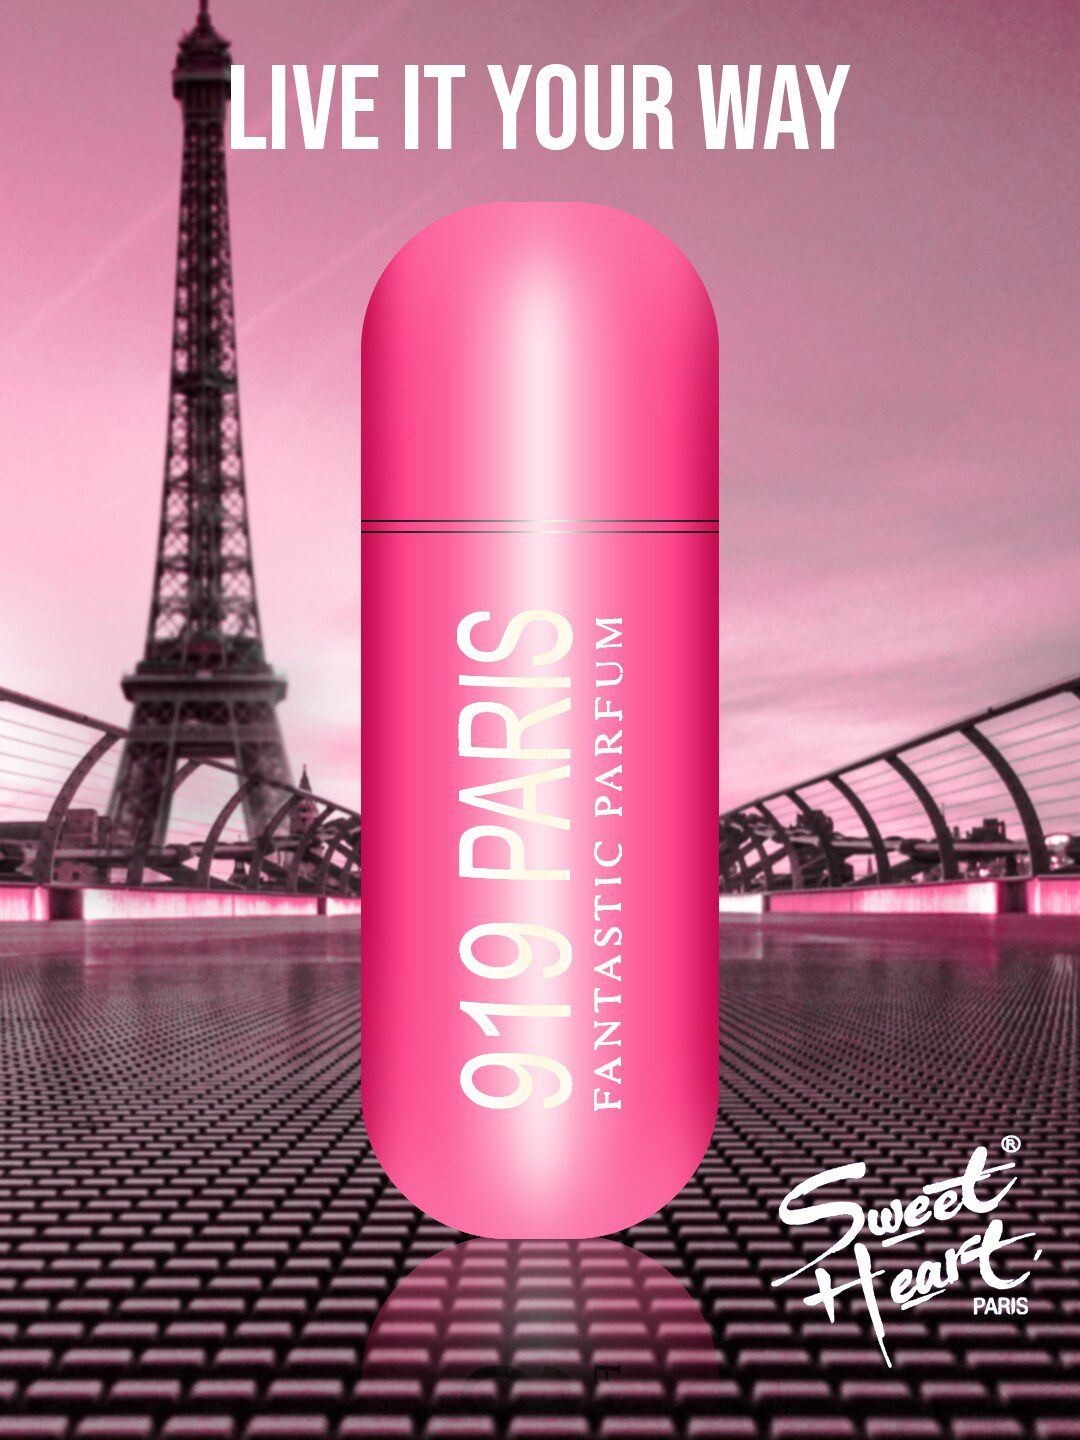 Sweetheart 919 Paris Pink Eau De Parfum - 50 ml Price in India